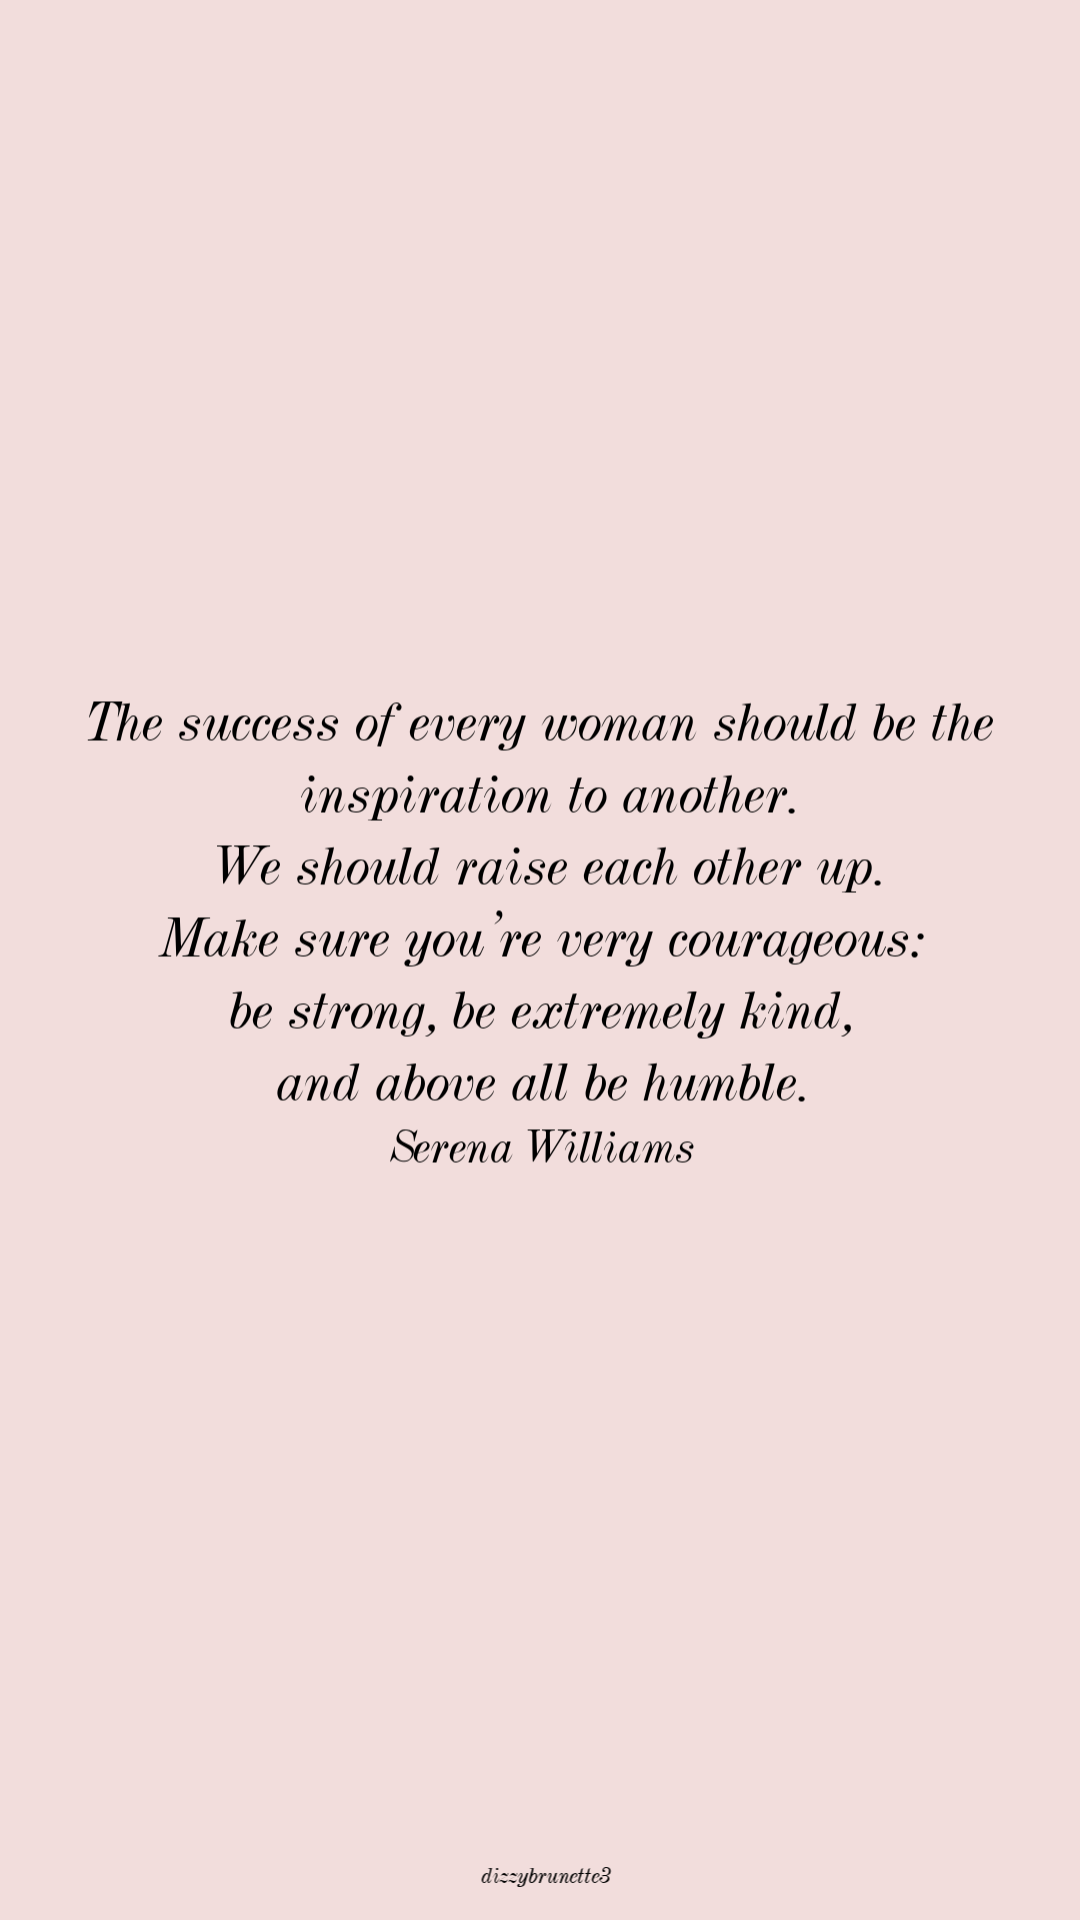 Serena Williams // Quotes // Inspiring Women. Boss quotes, Inspirational quotes, Empowerment quotes